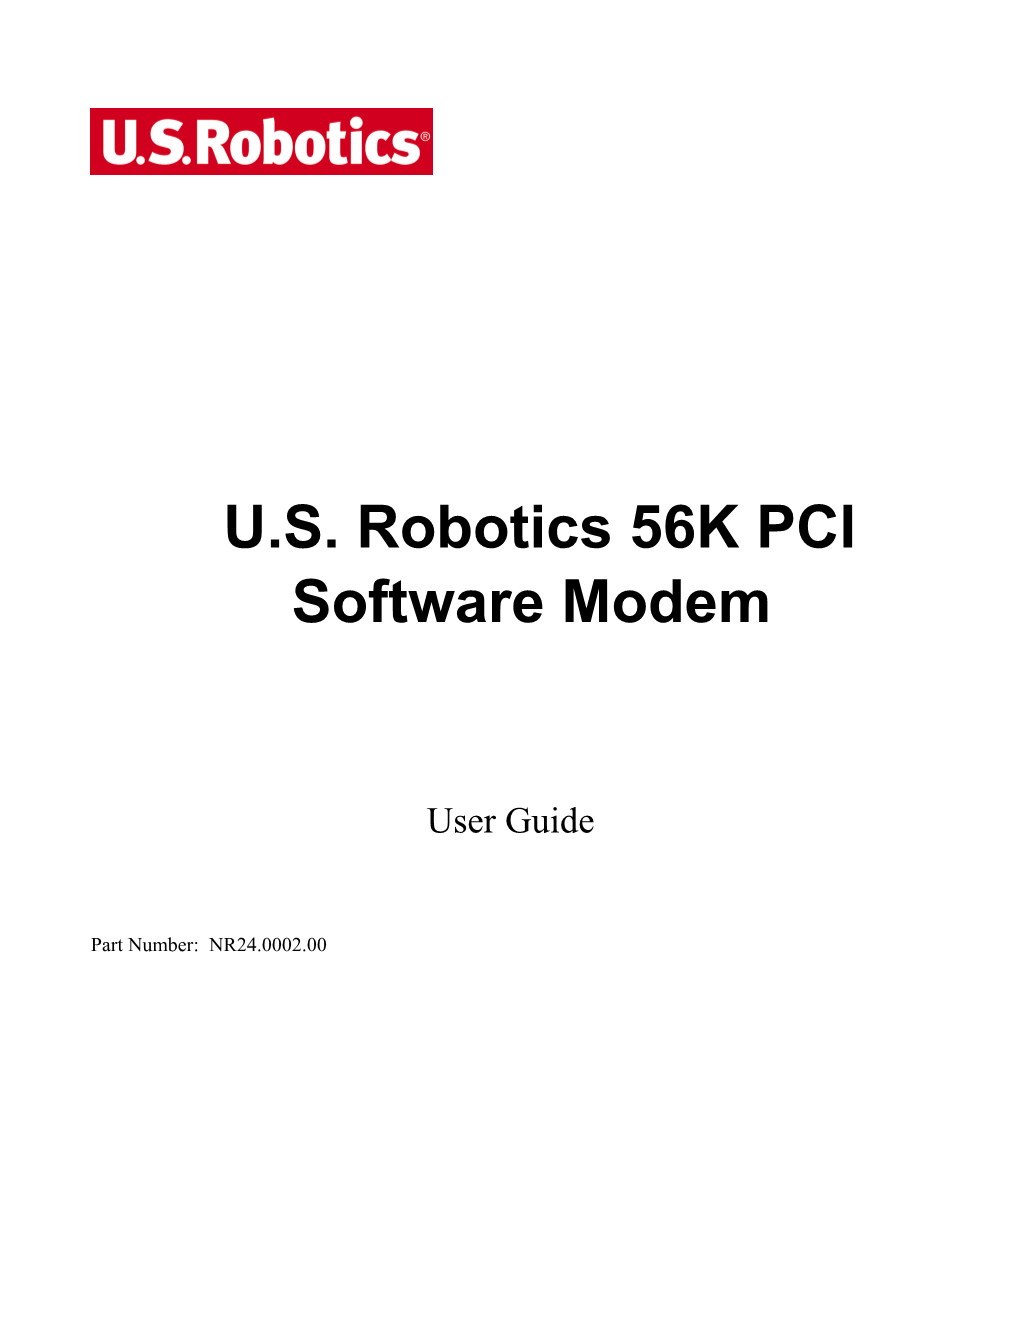 U.S. Robotics 56K PCI Software Modem